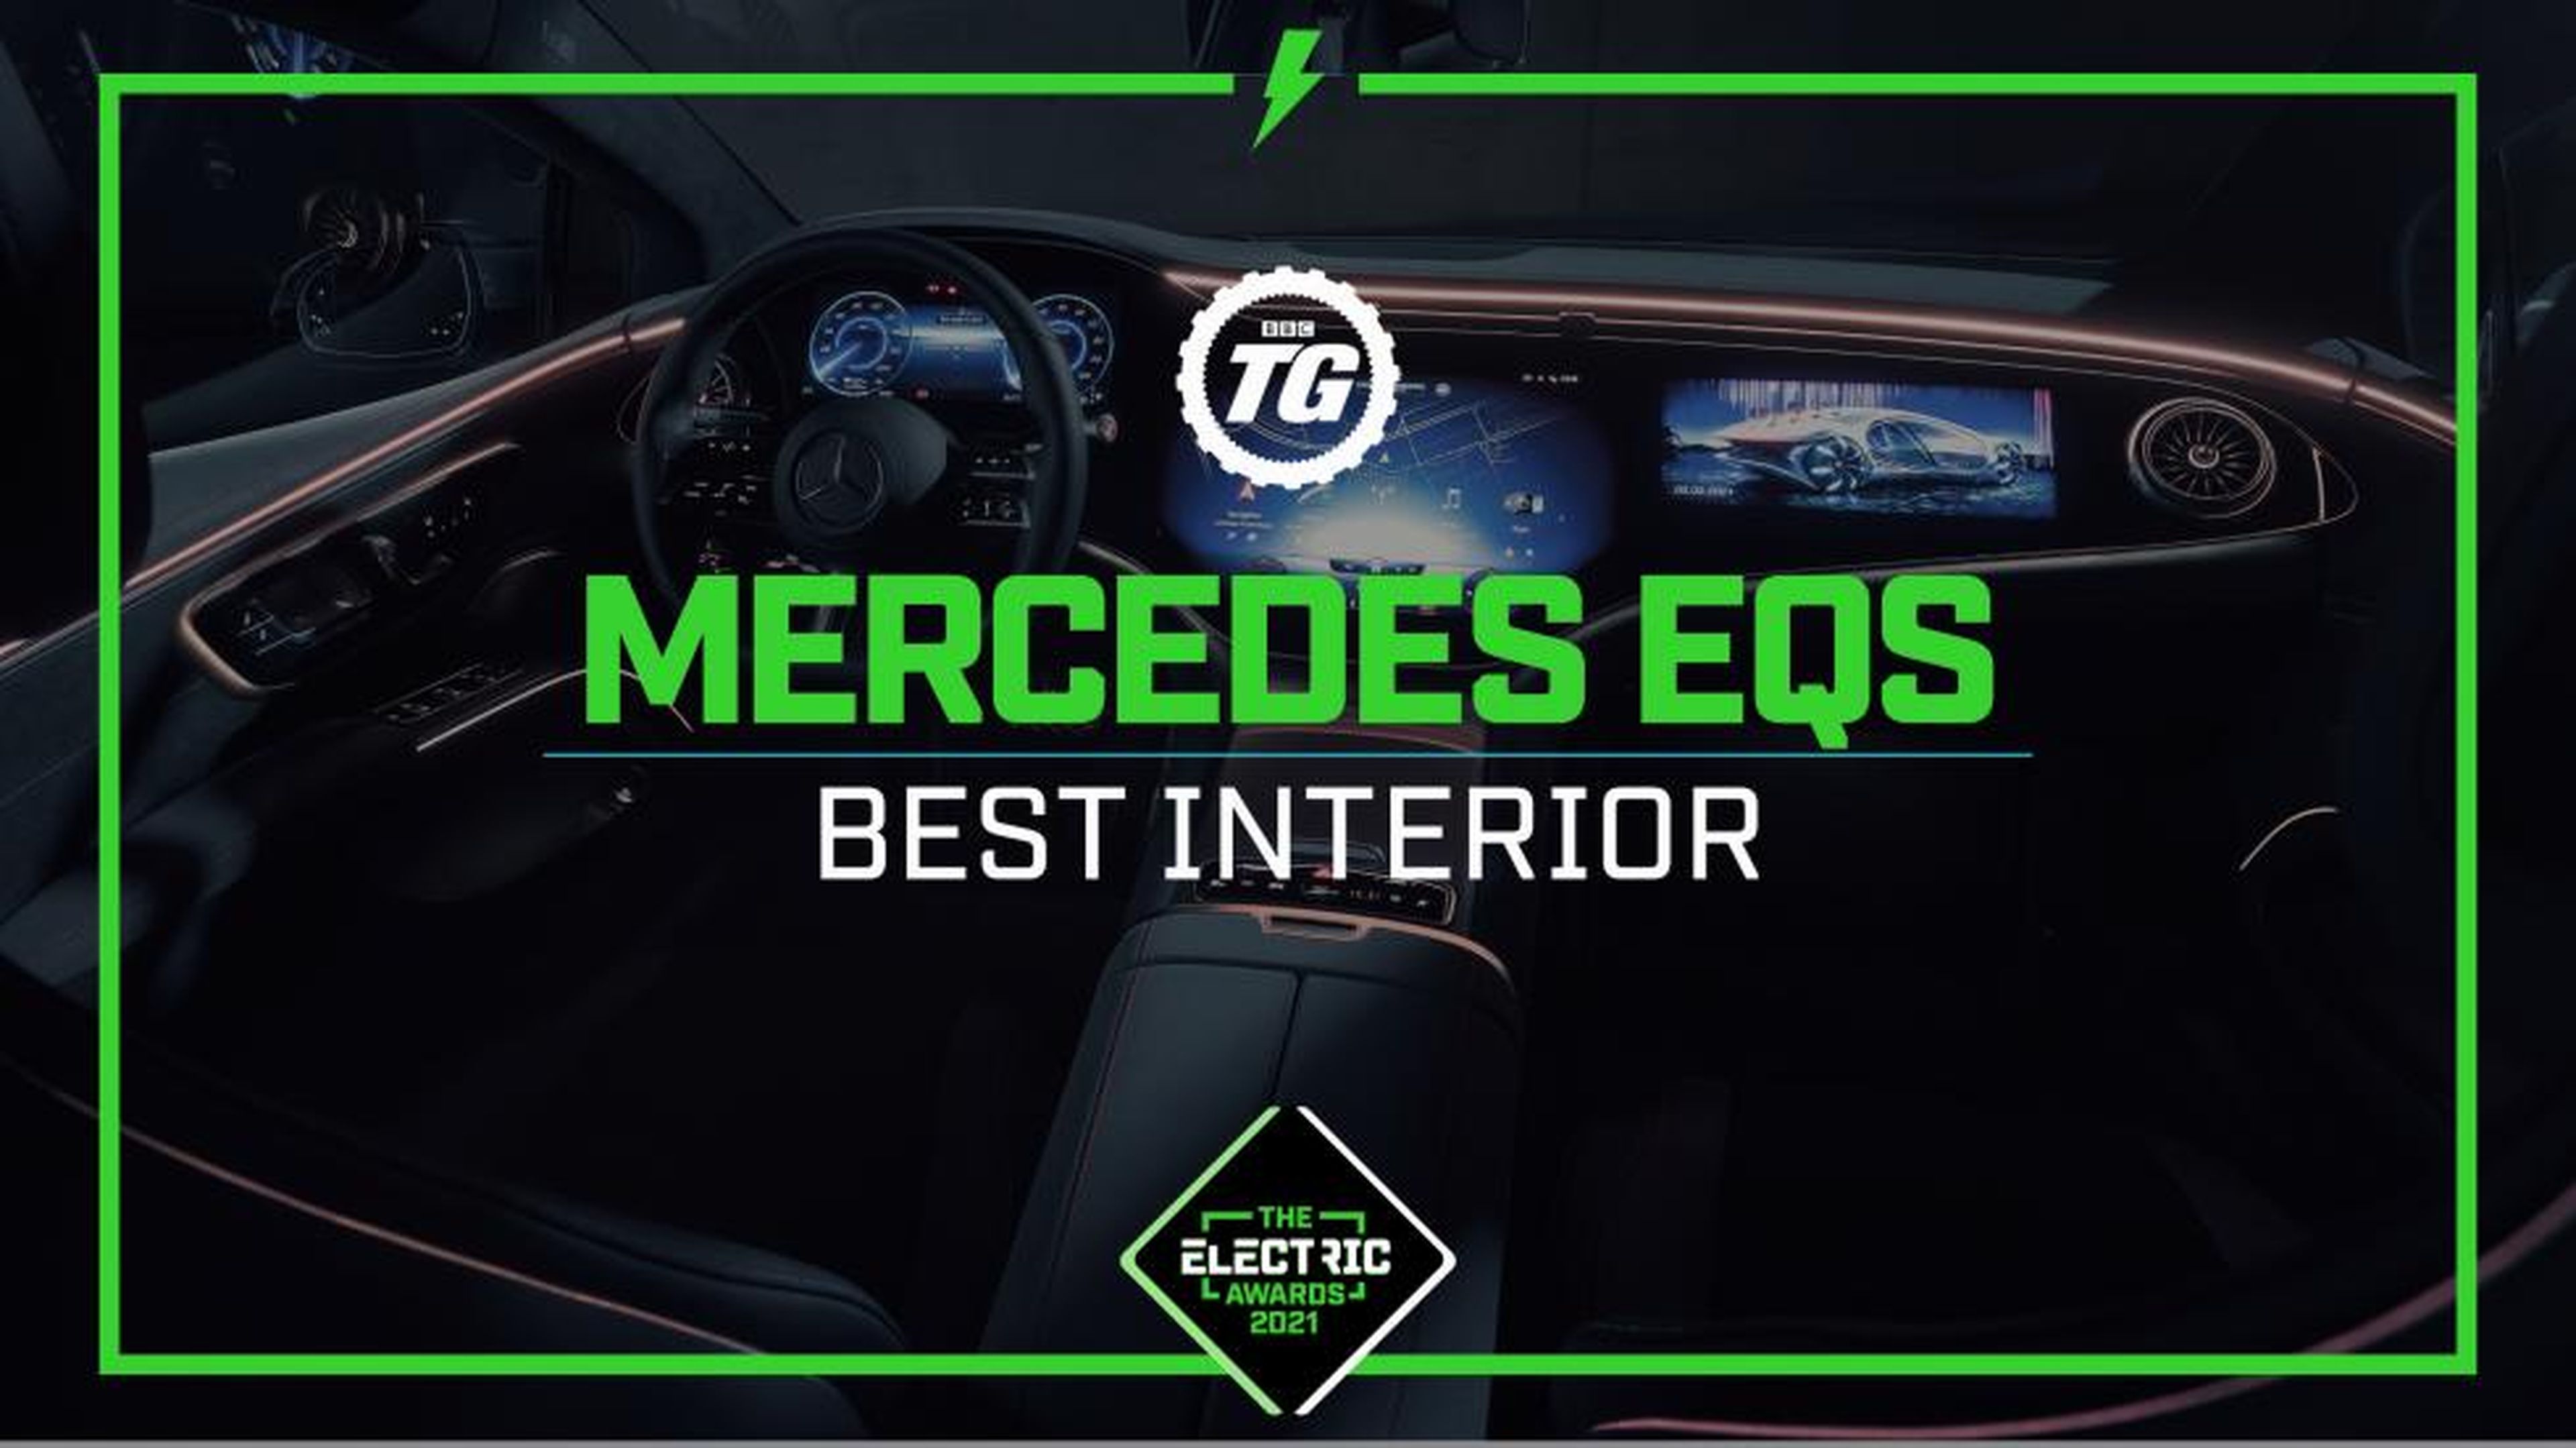 Top Gear Electric Awards: Mercedes EQS